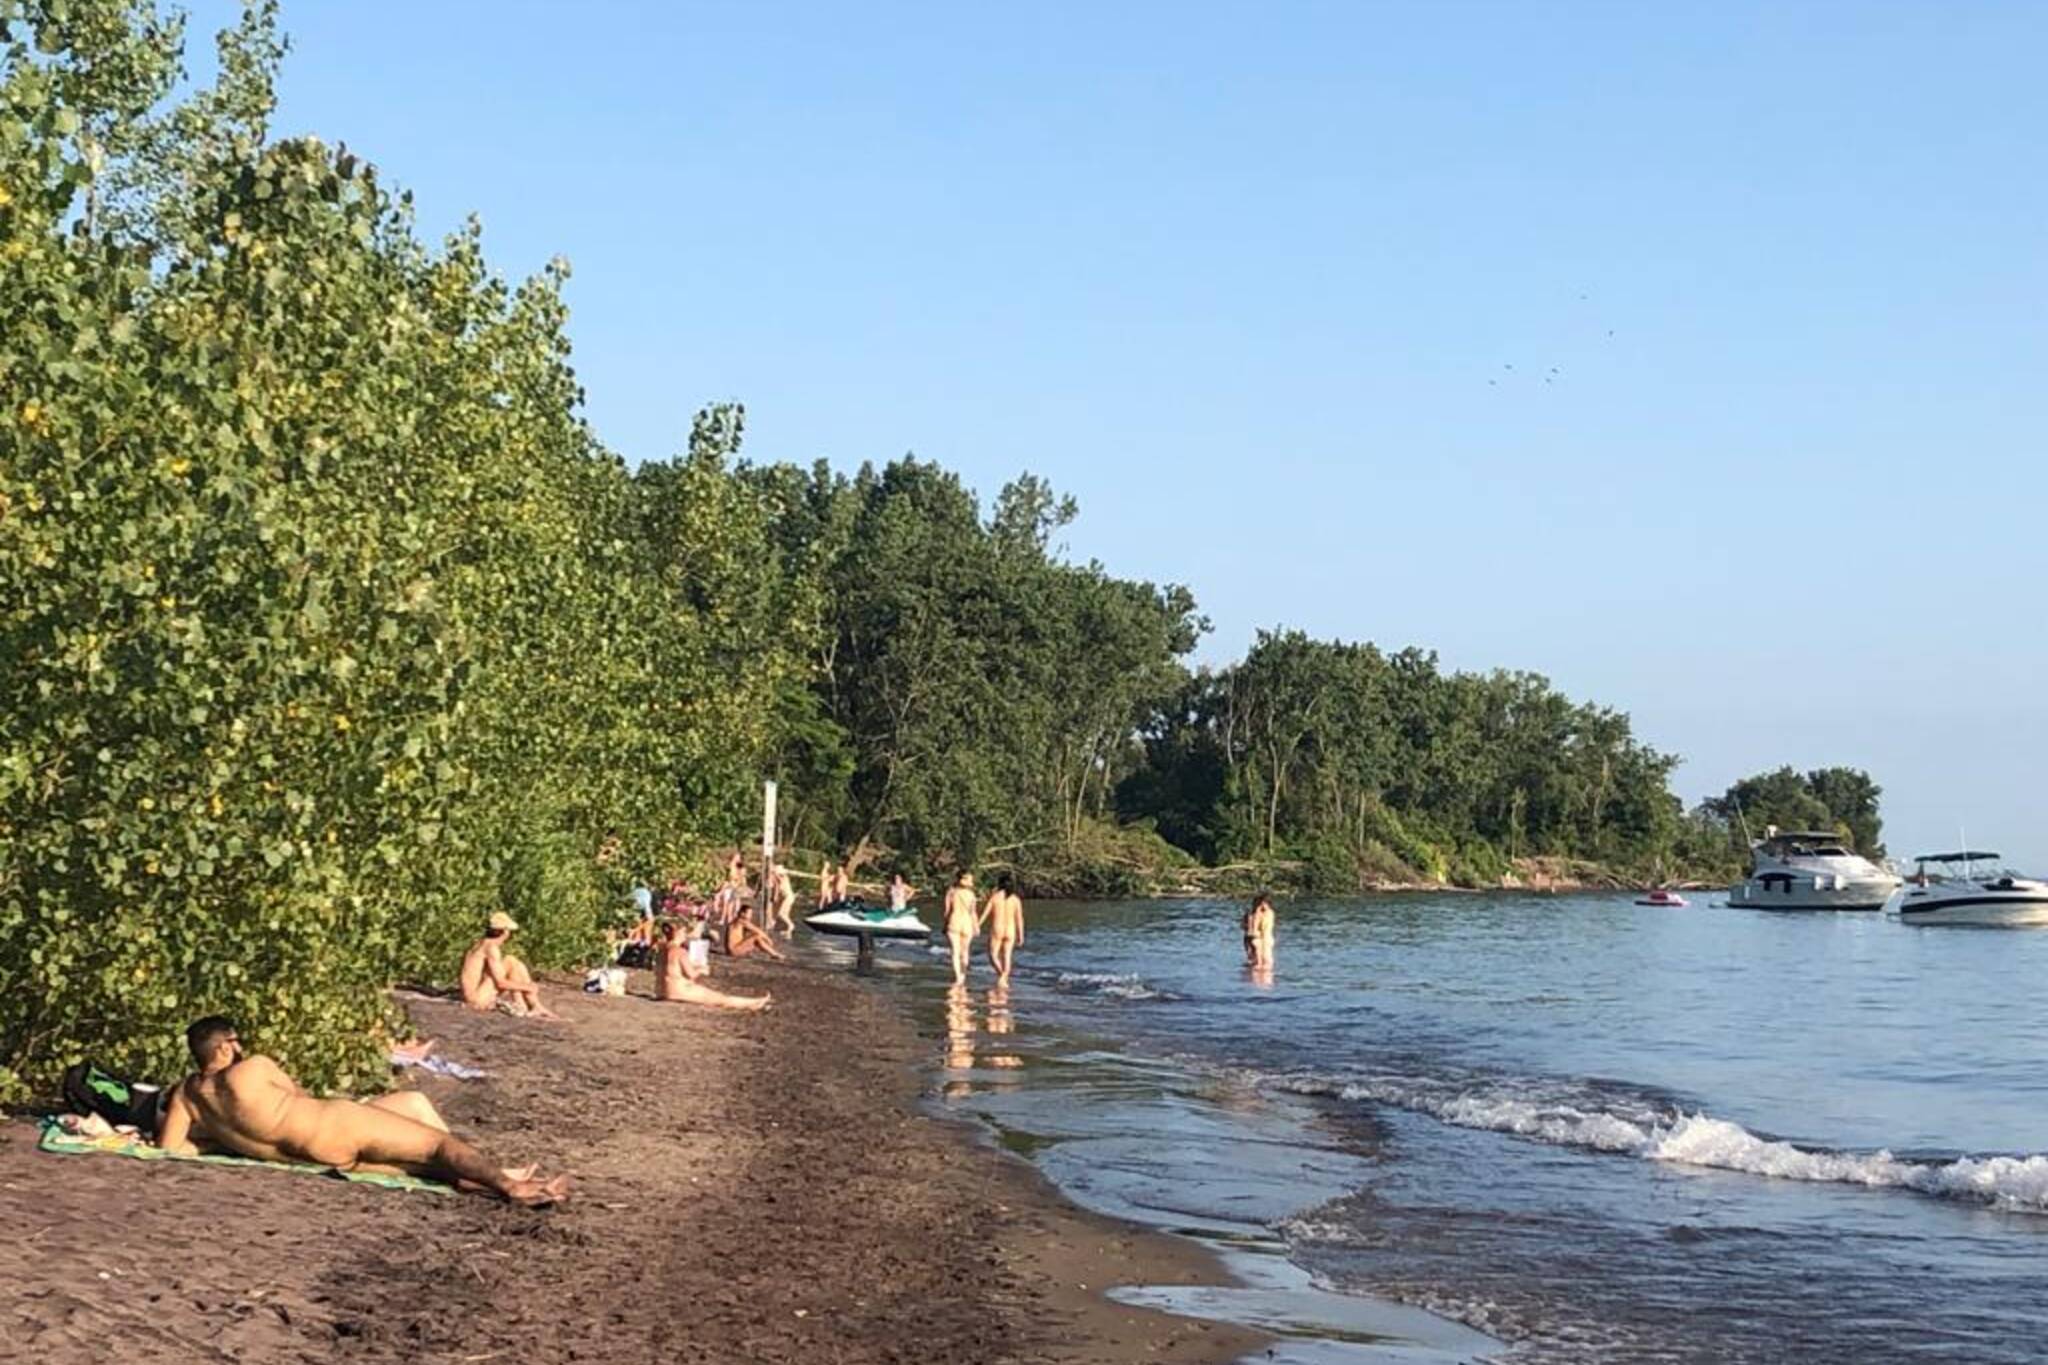 Hanlan's Point is the Toronto Island's famous nude beach